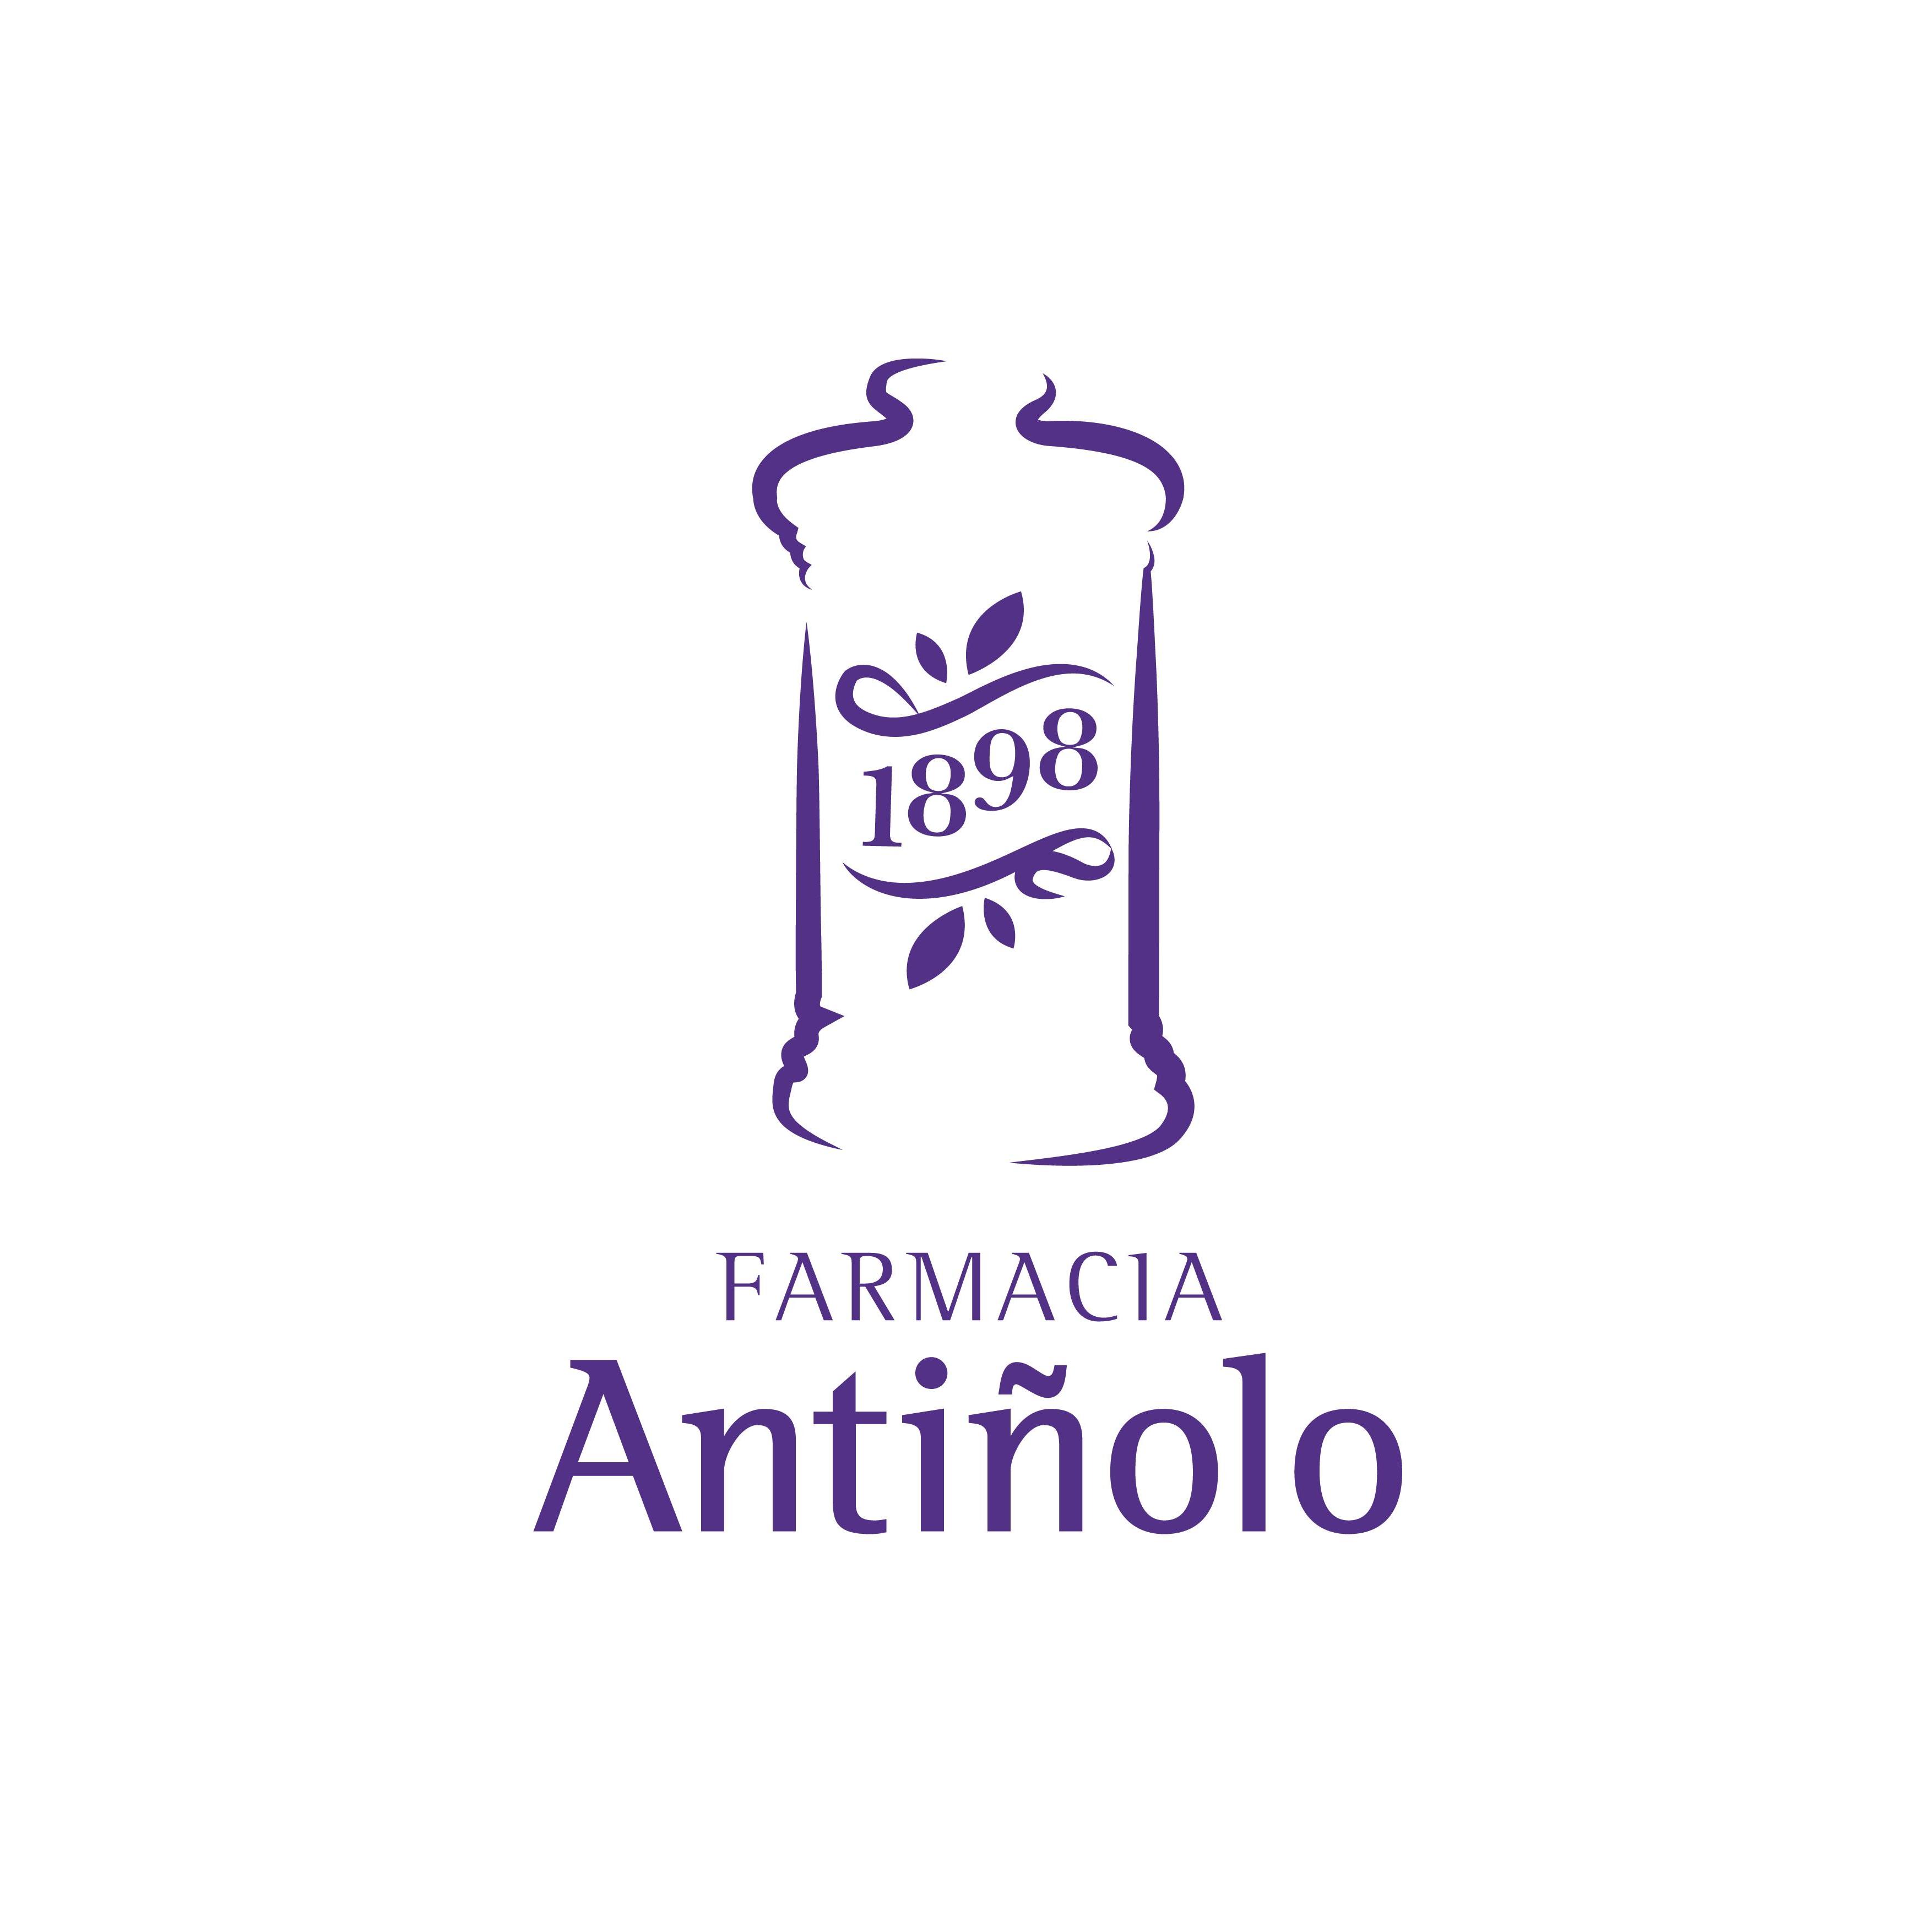 Farmacia Antiñolo Logo